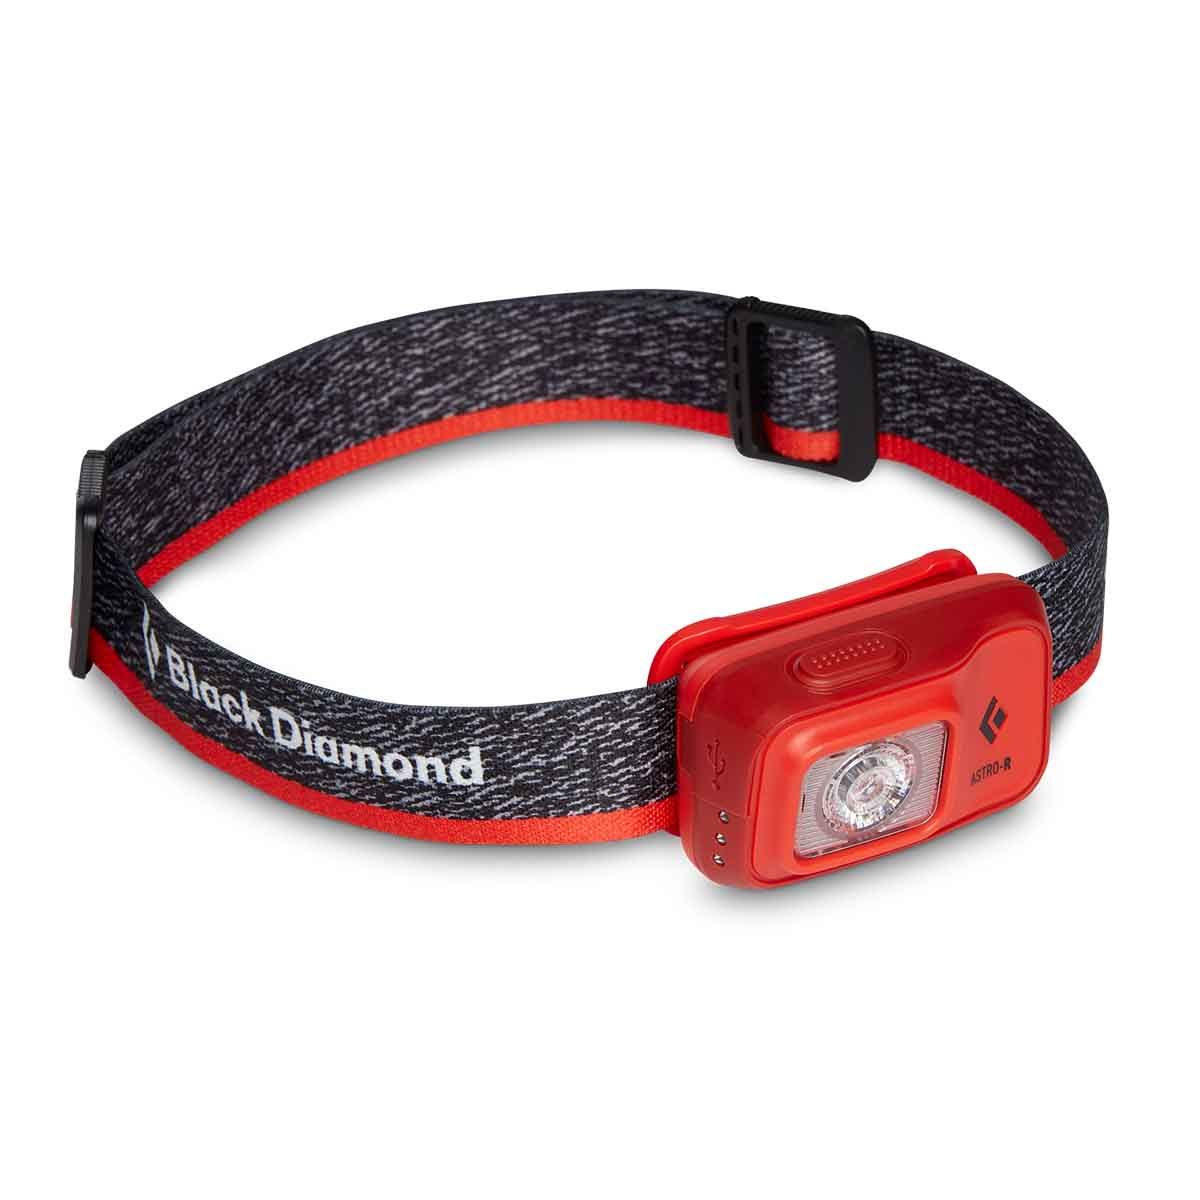 Black Diamond Astro 300-R Headlamp - Octane